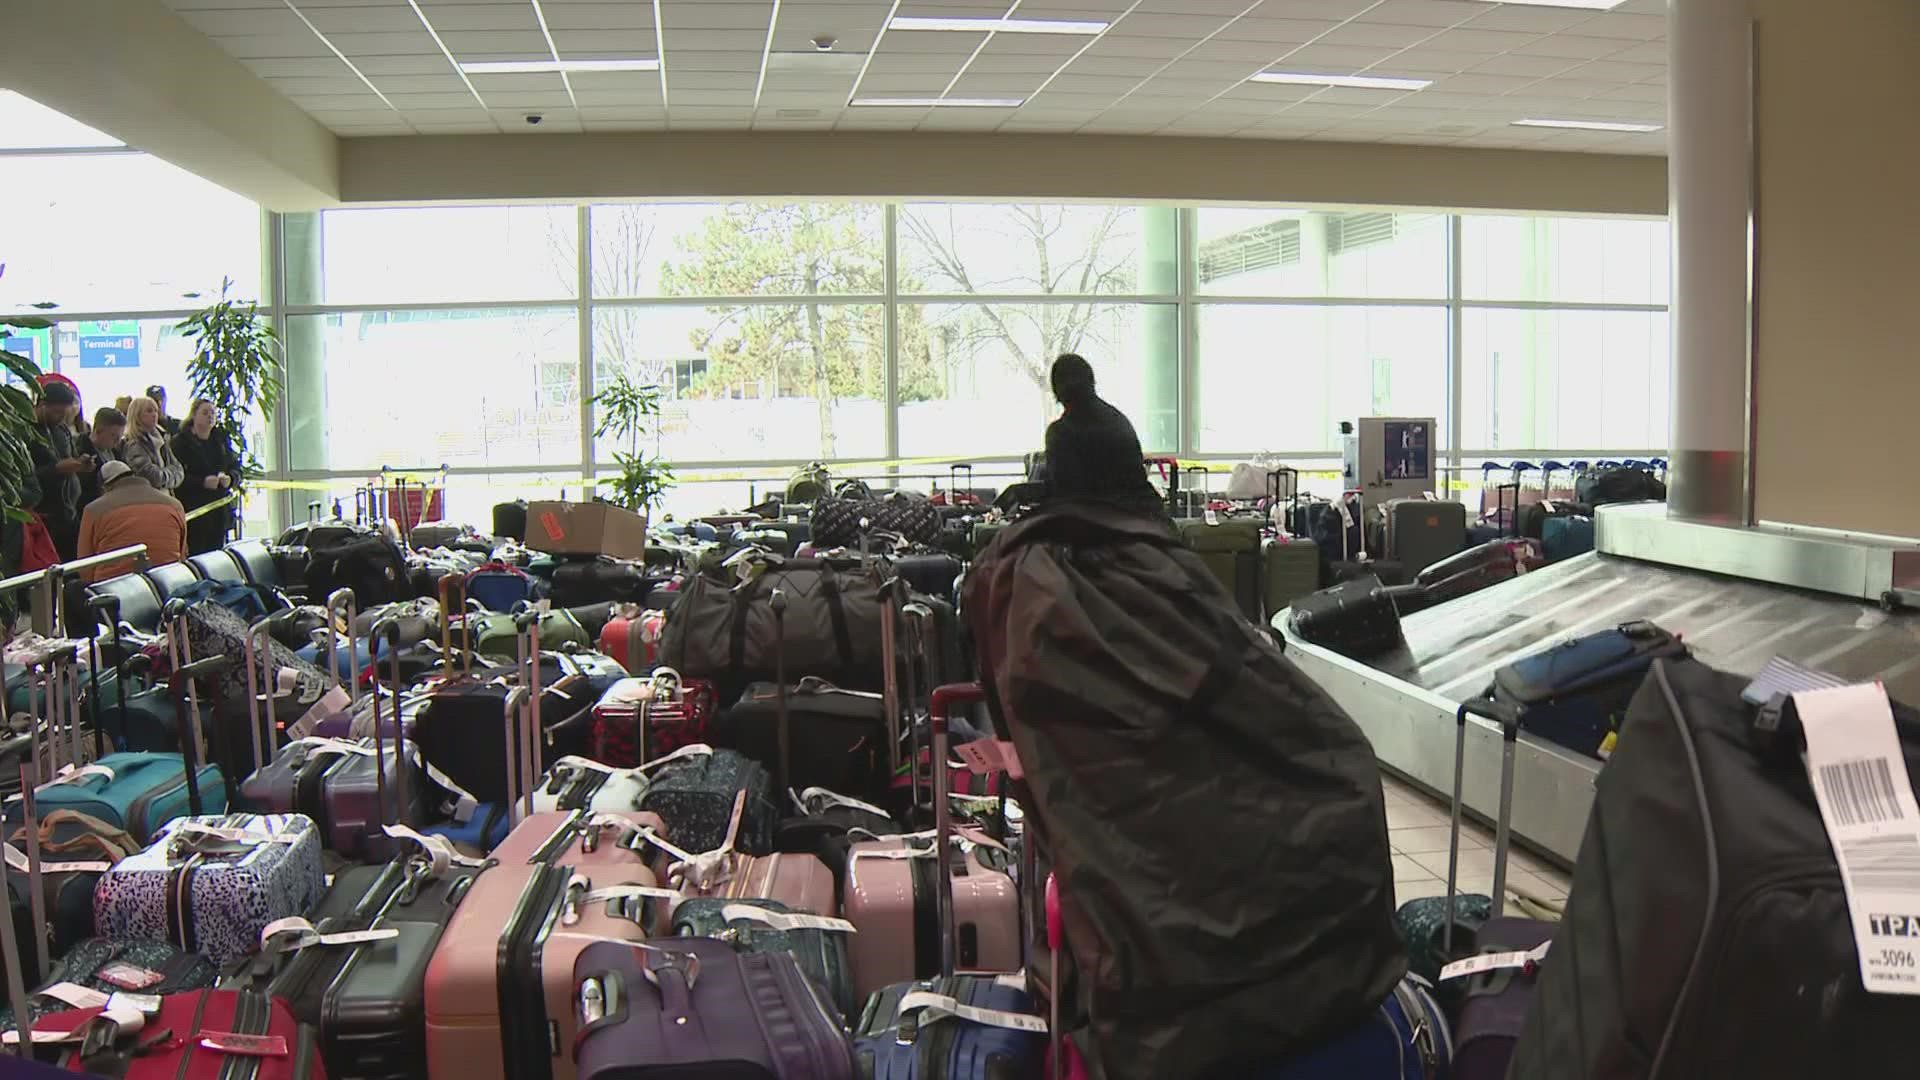 Luggage no longer piled up at Lambert, travel delays continue